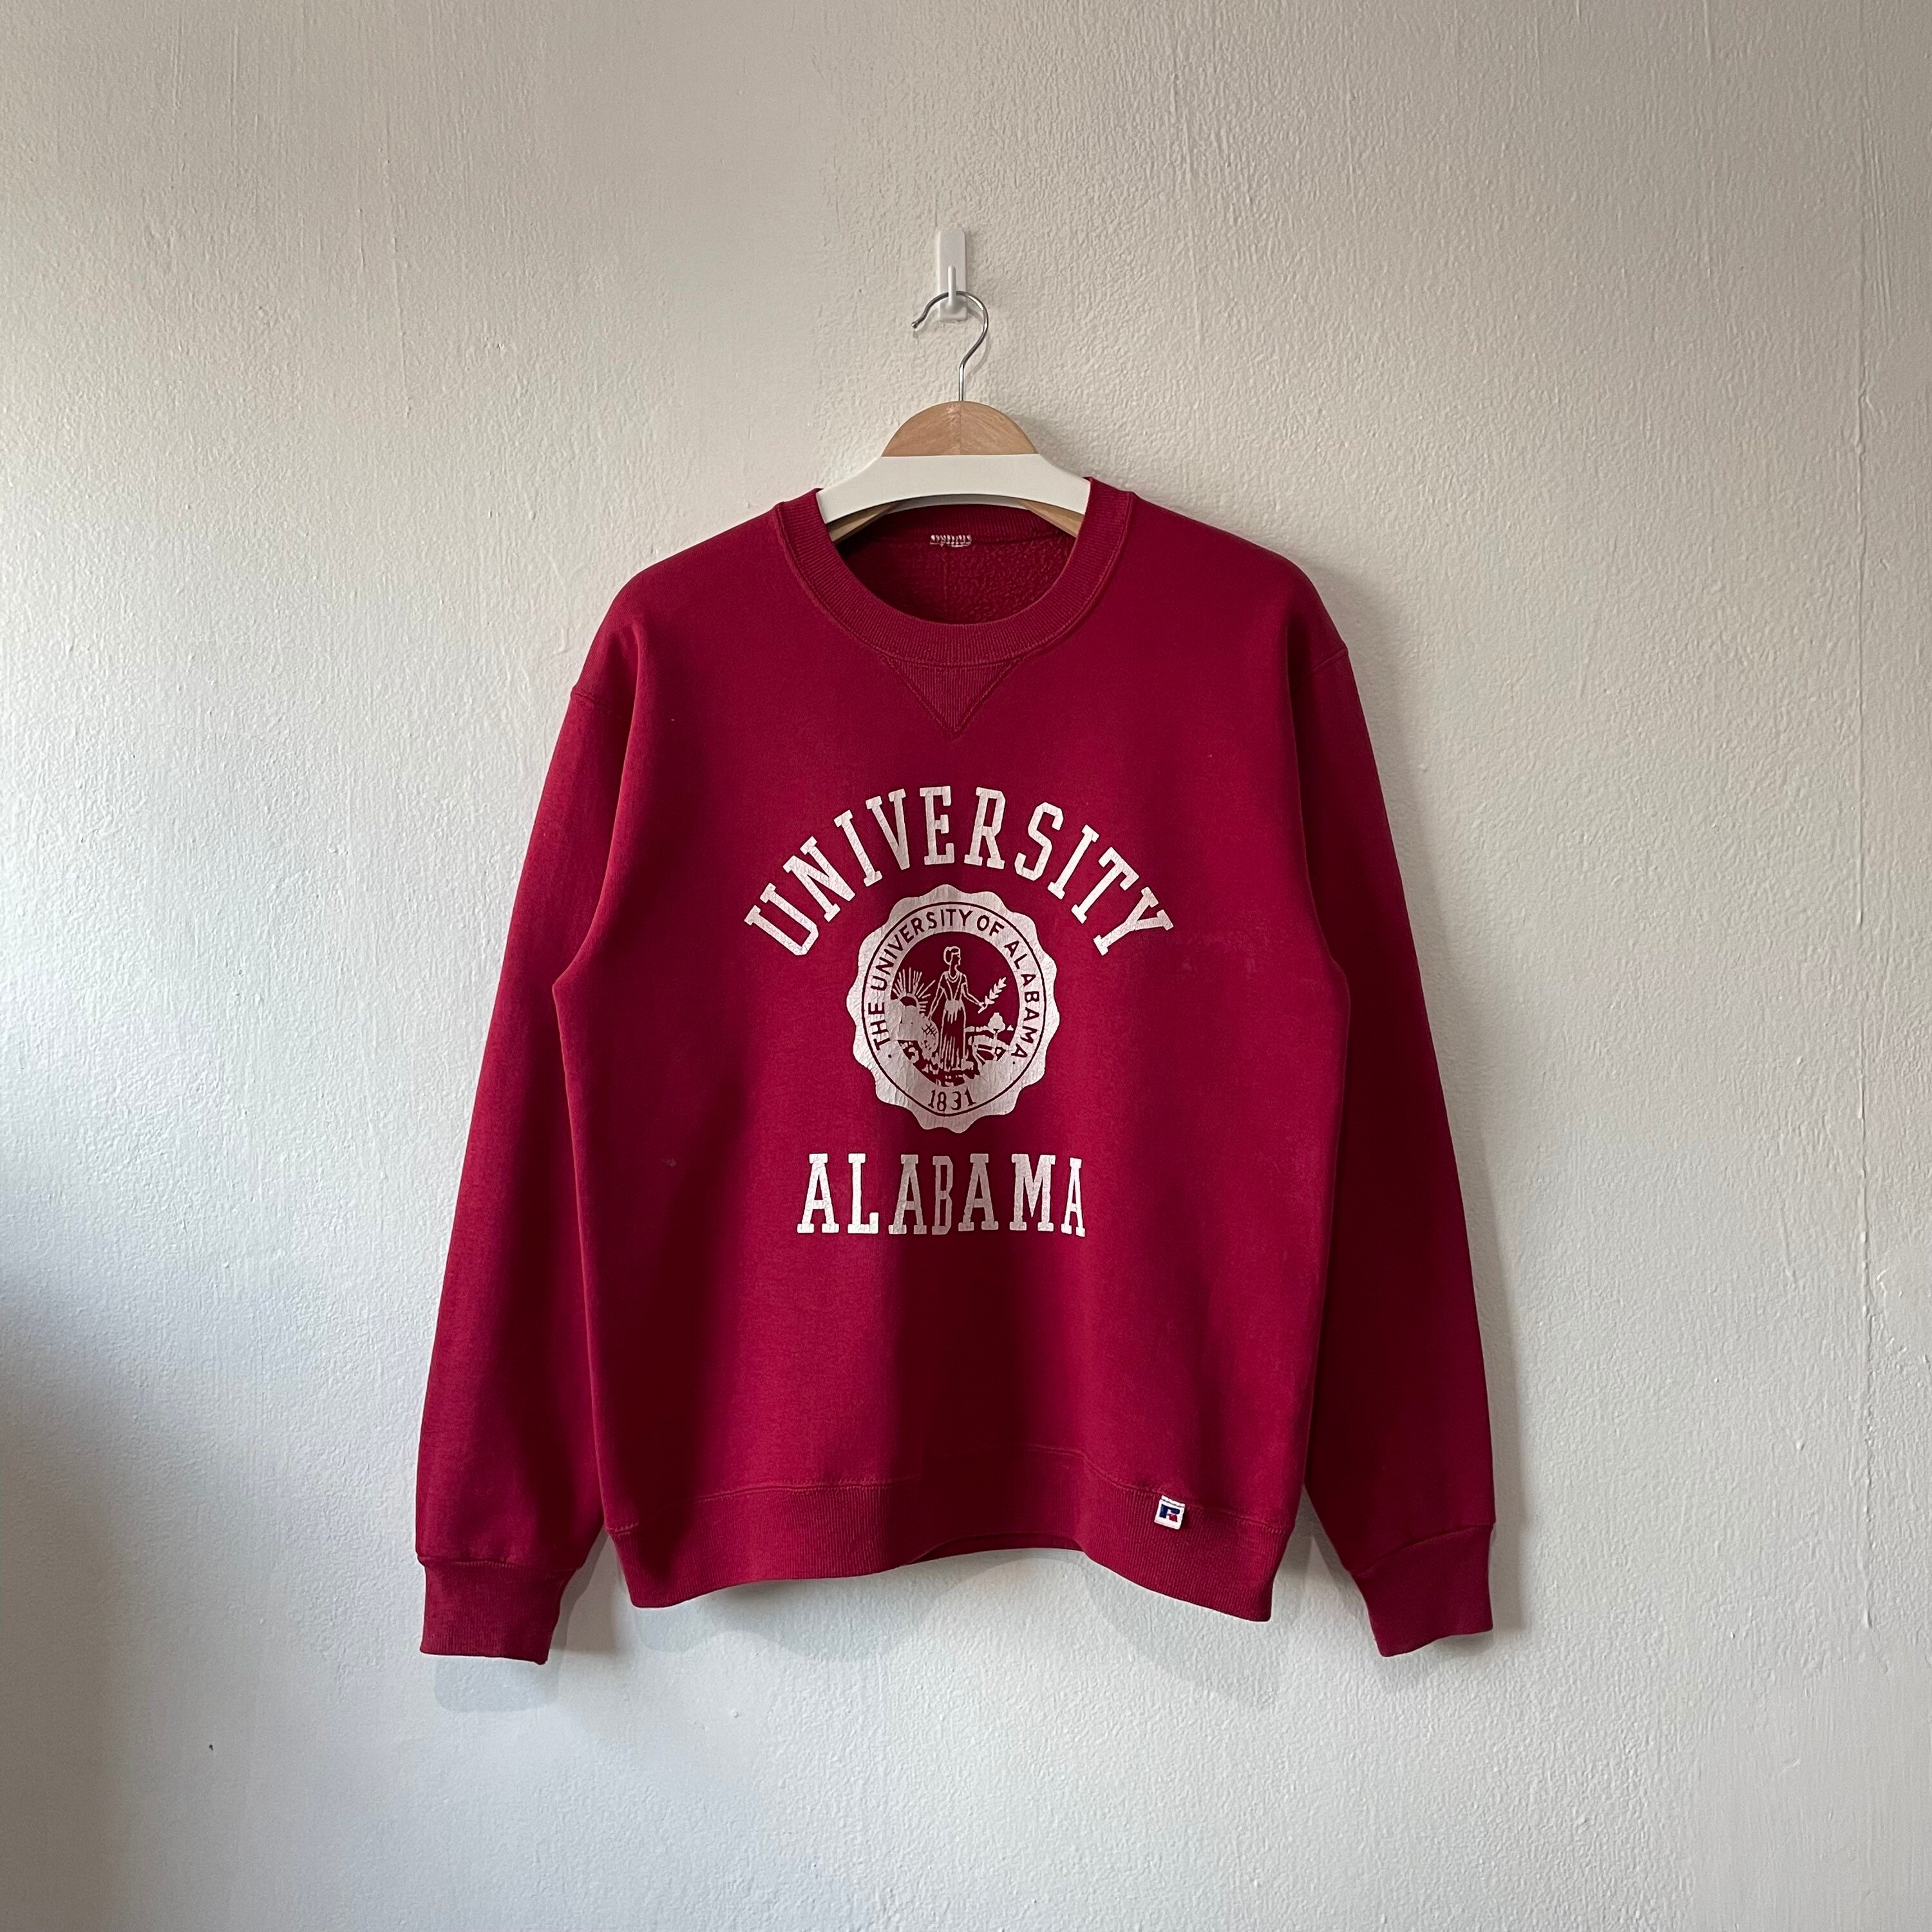 Vintage 90s University of Alabama Crewneck Sweatshirt | Etsy